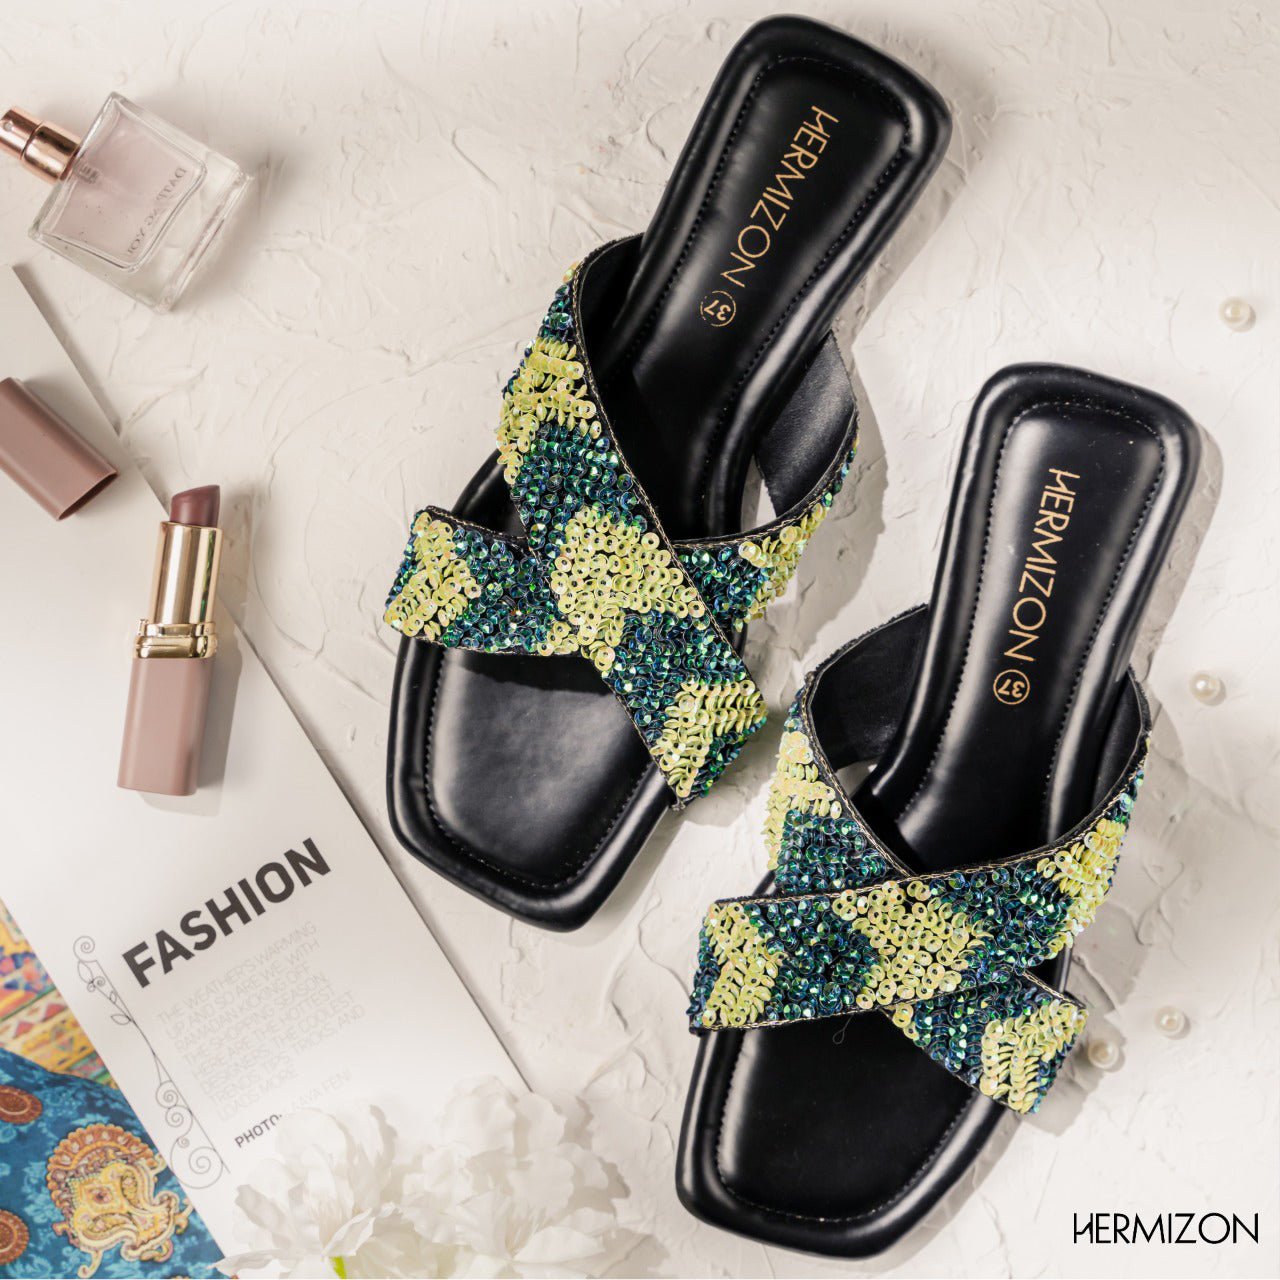 Black color sandal, a shoe from Hermizon Brand